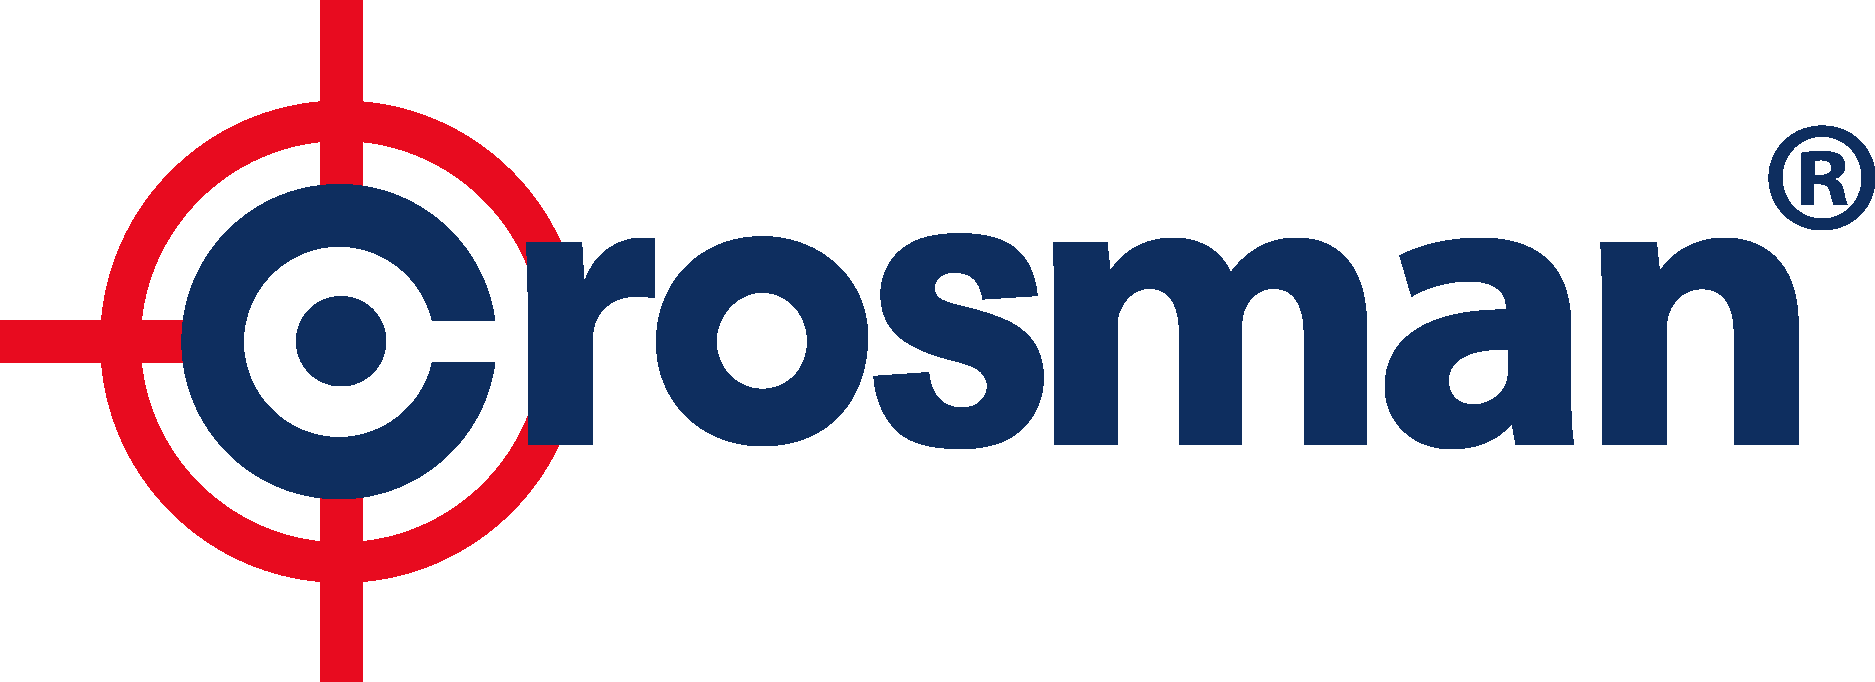 Crosman Logo Vector